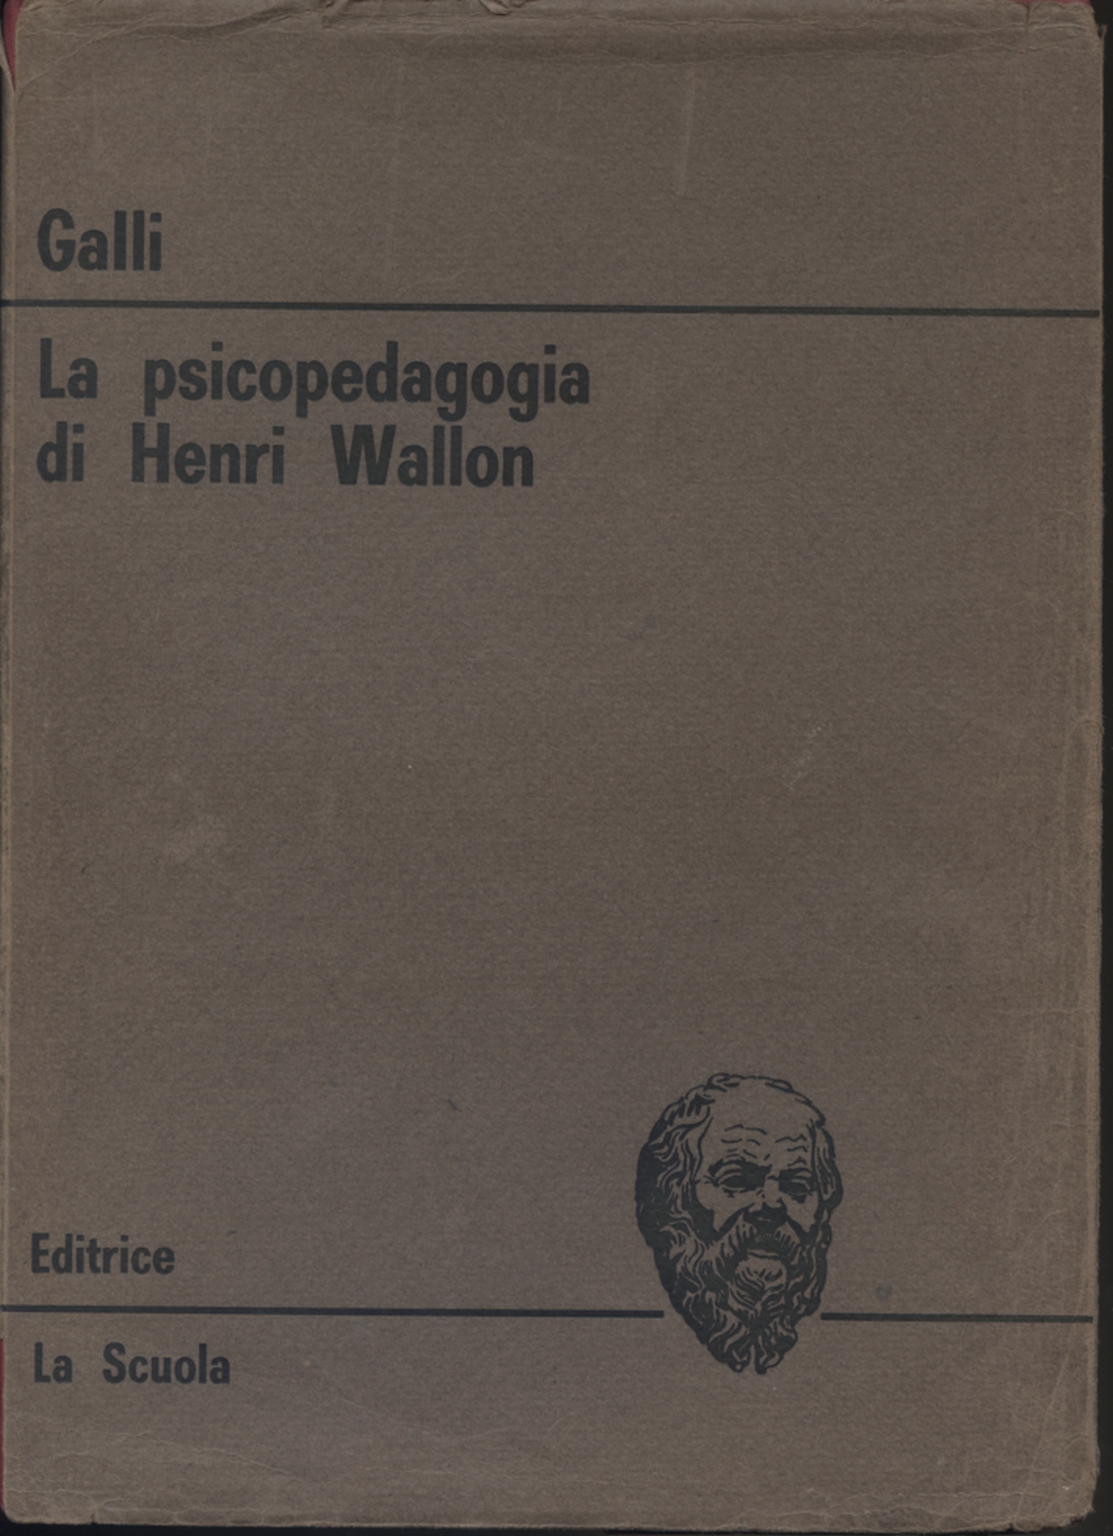 The artist Henri Wallon, Norberto Galli